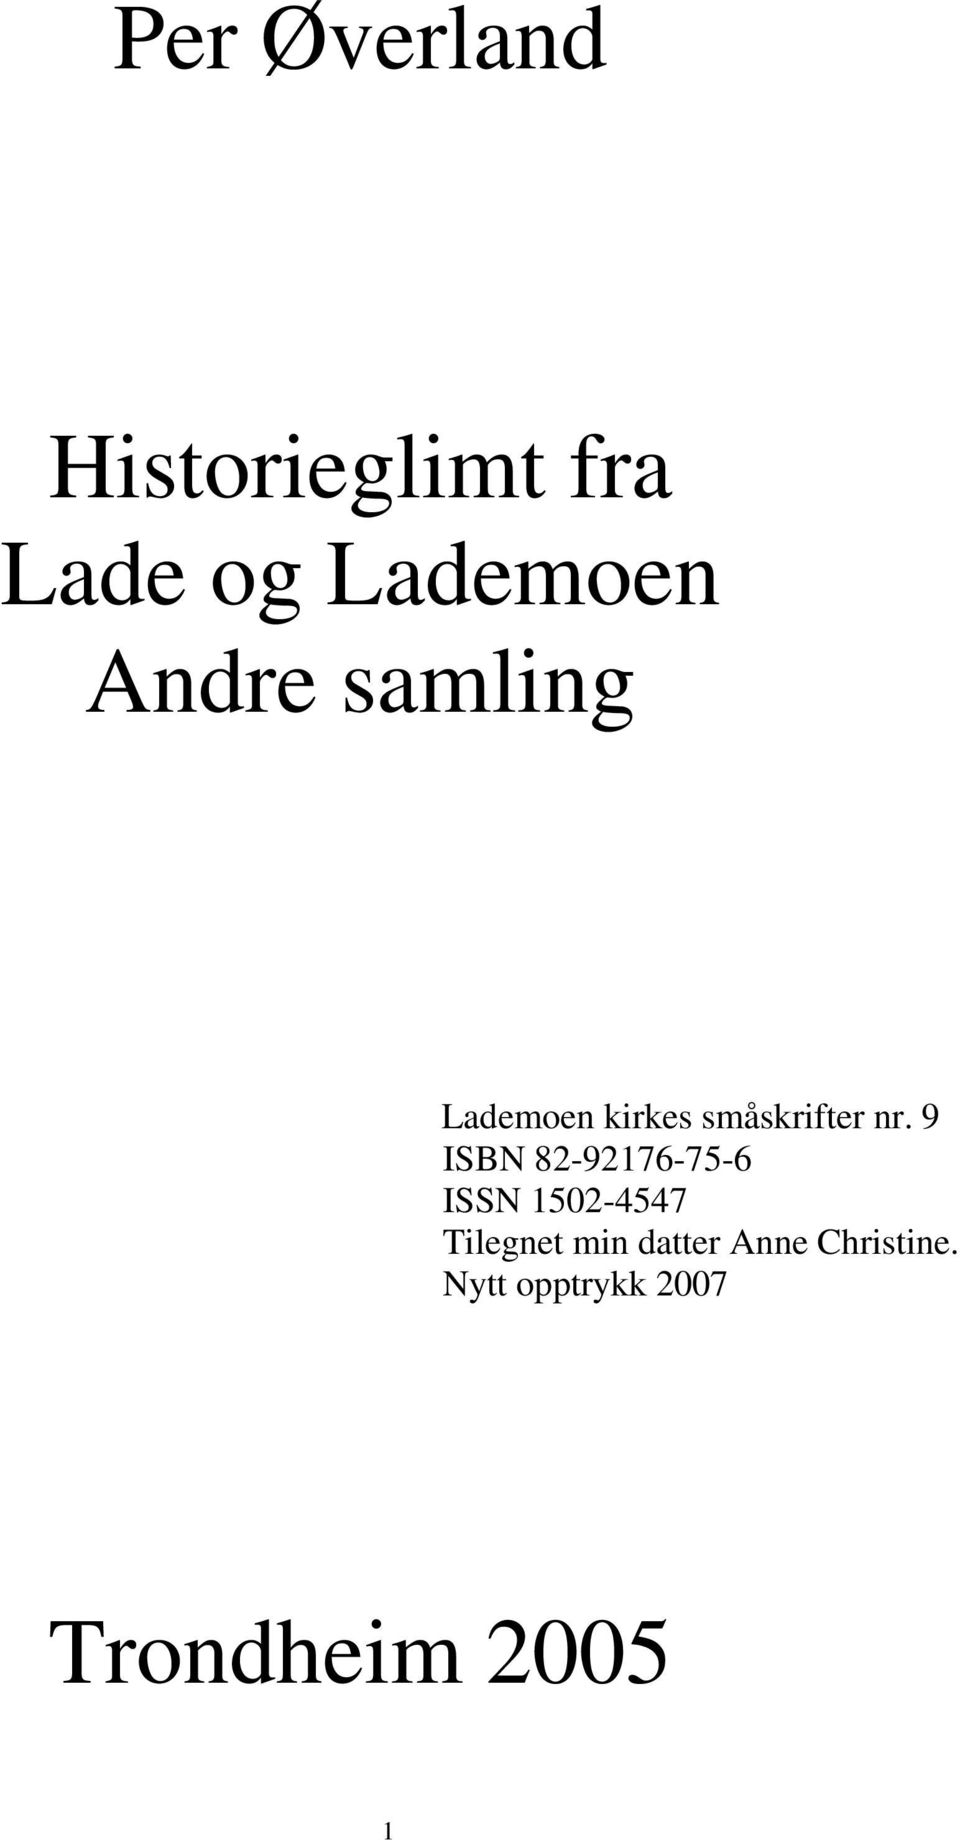 9 ISBN 82-92176-75-6 ISSN 1502-4547 Tilegnet min